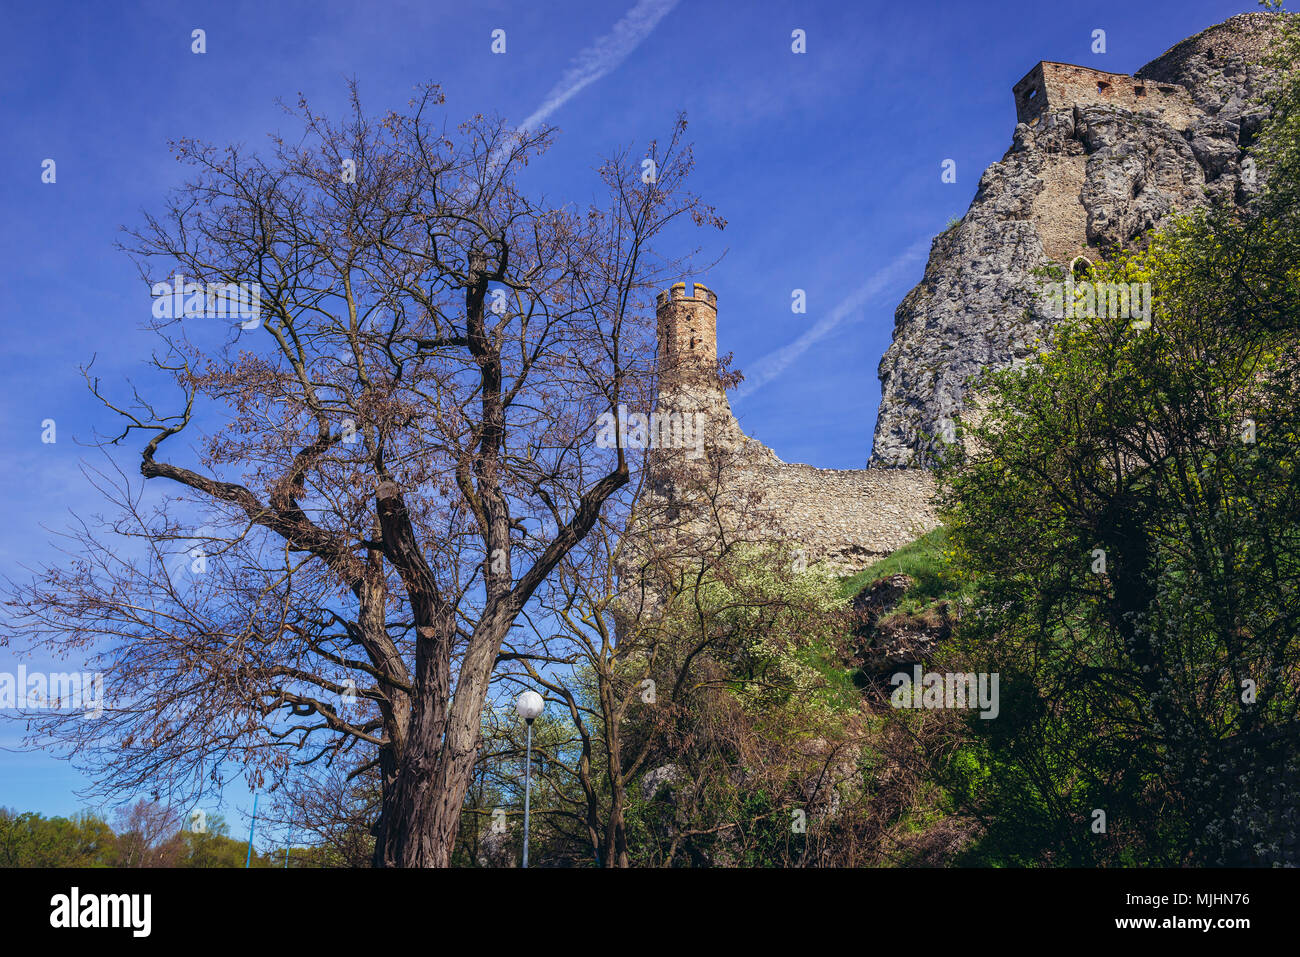 Castle in Devin, borough of Bratislava, one of the oldest castles in Slovakia Stock Photo